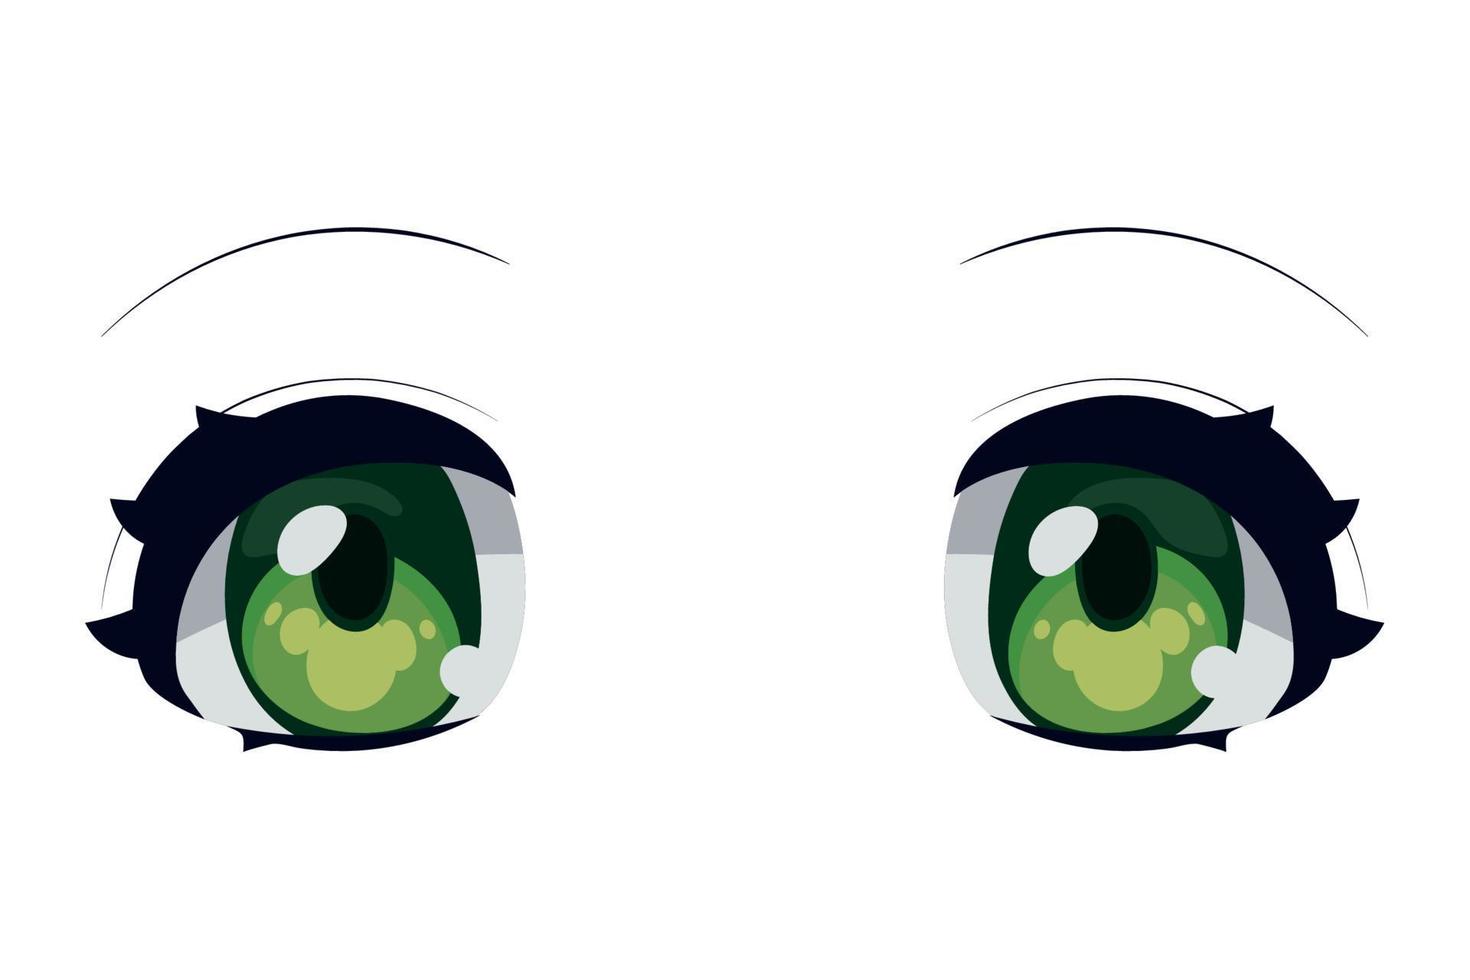 anime ojos verdes vector